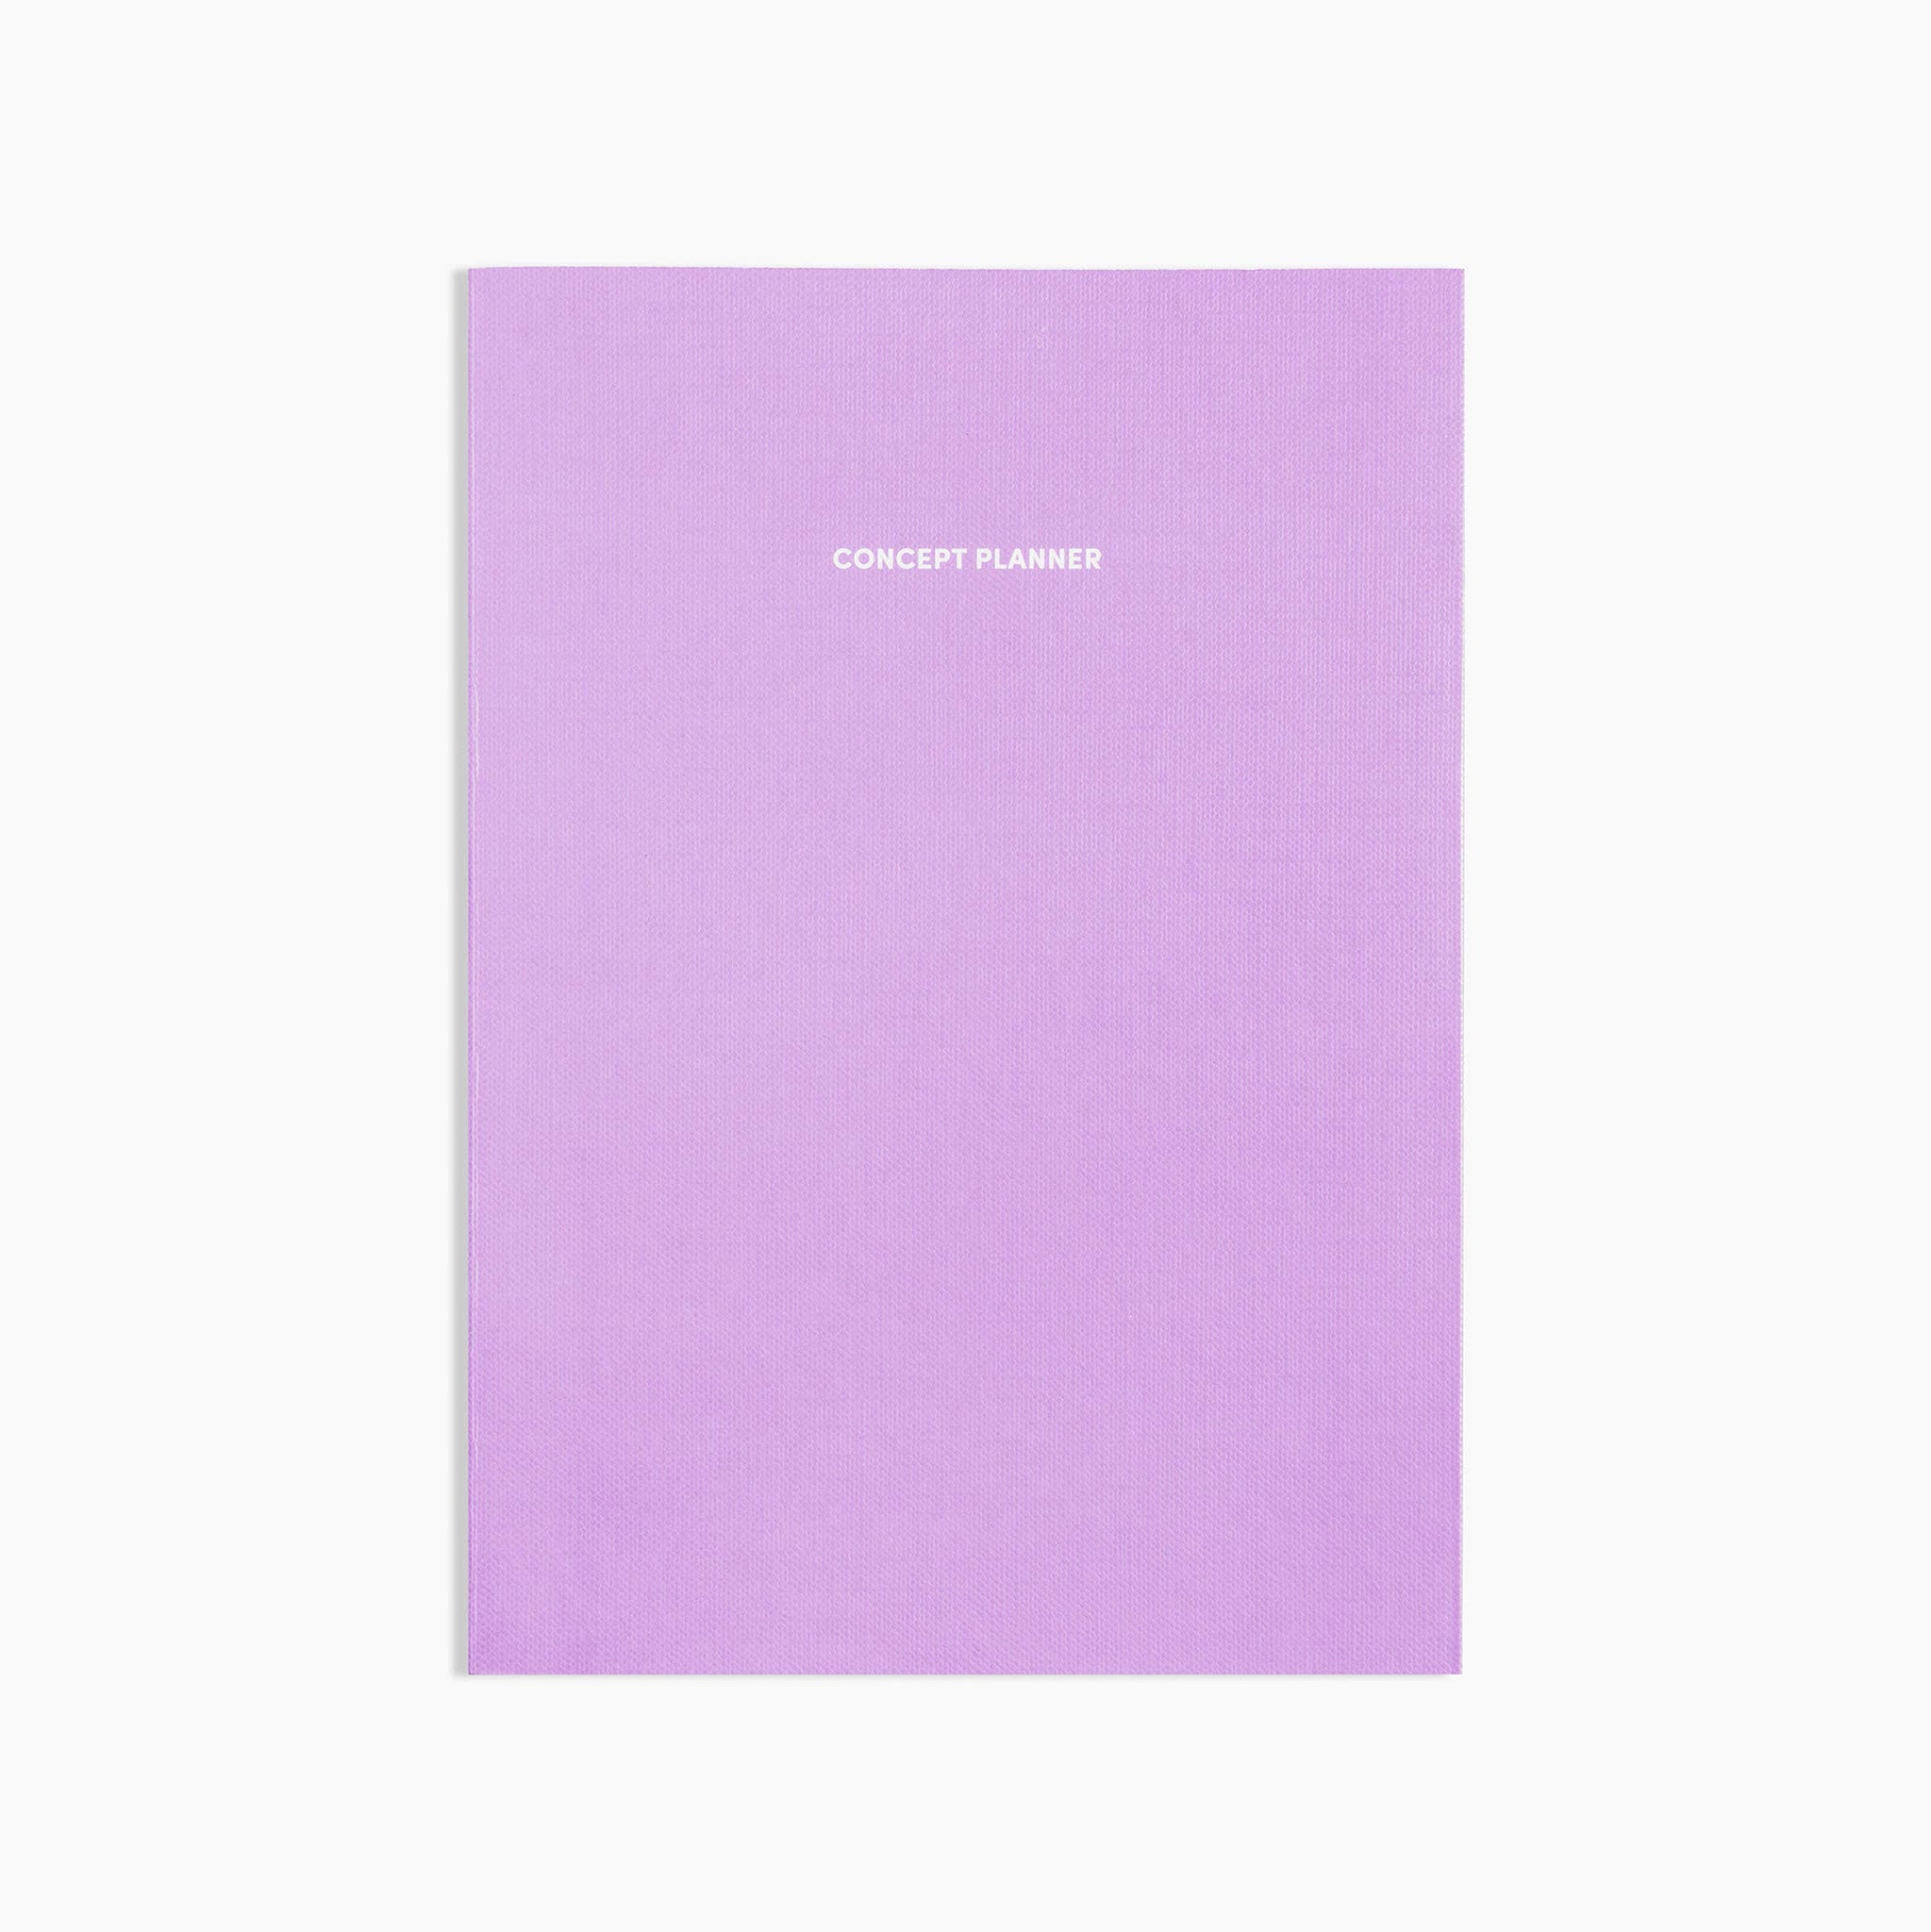 Concept Planner - Lavender